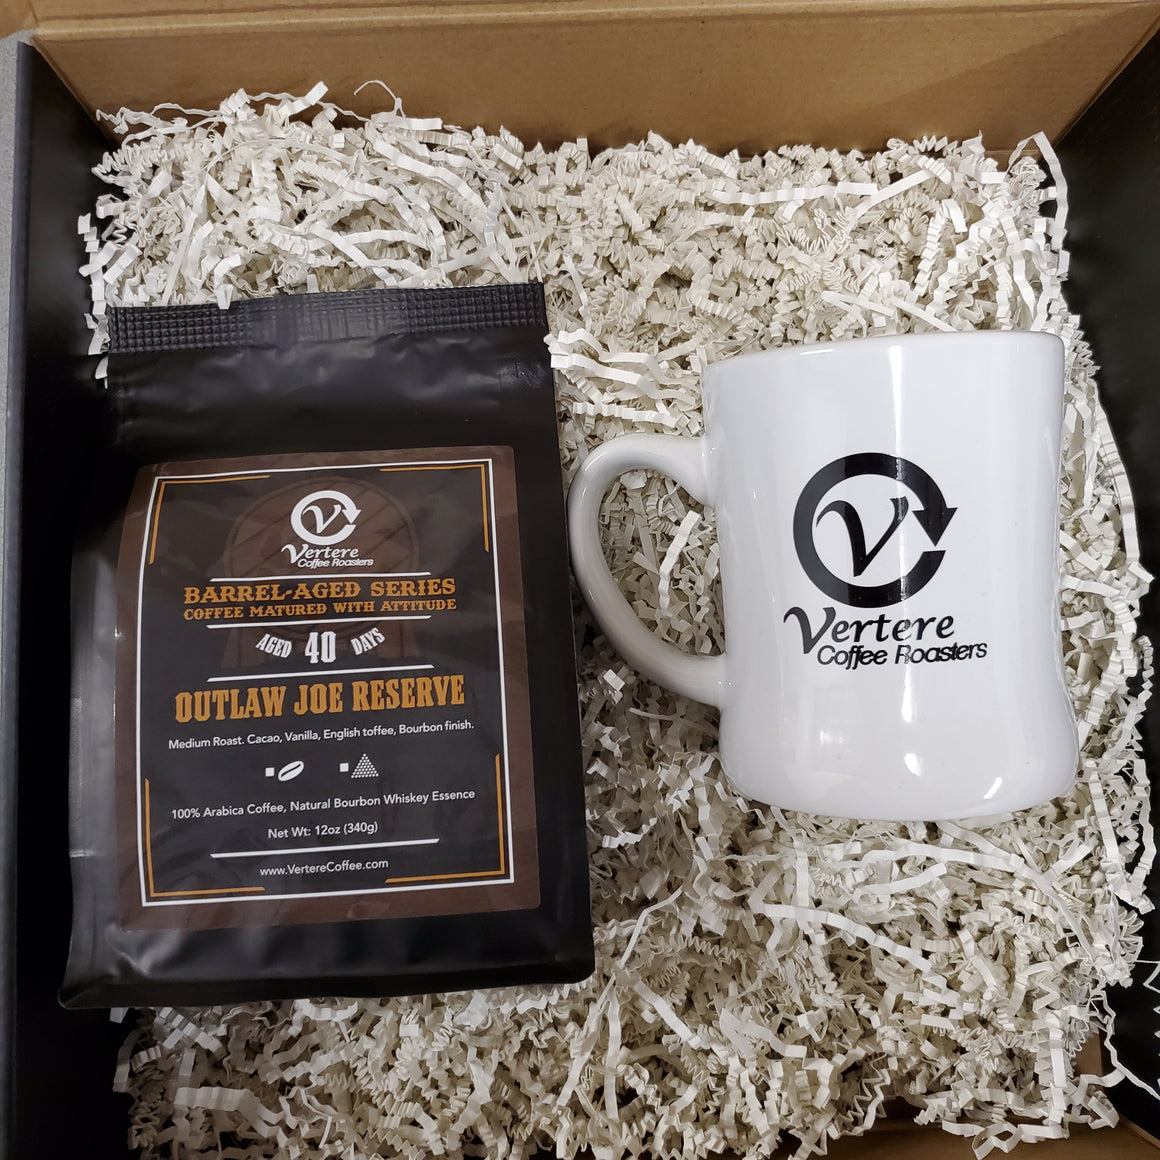 Gift: Barrel-Aged Series - Coffee and Vertere Mug